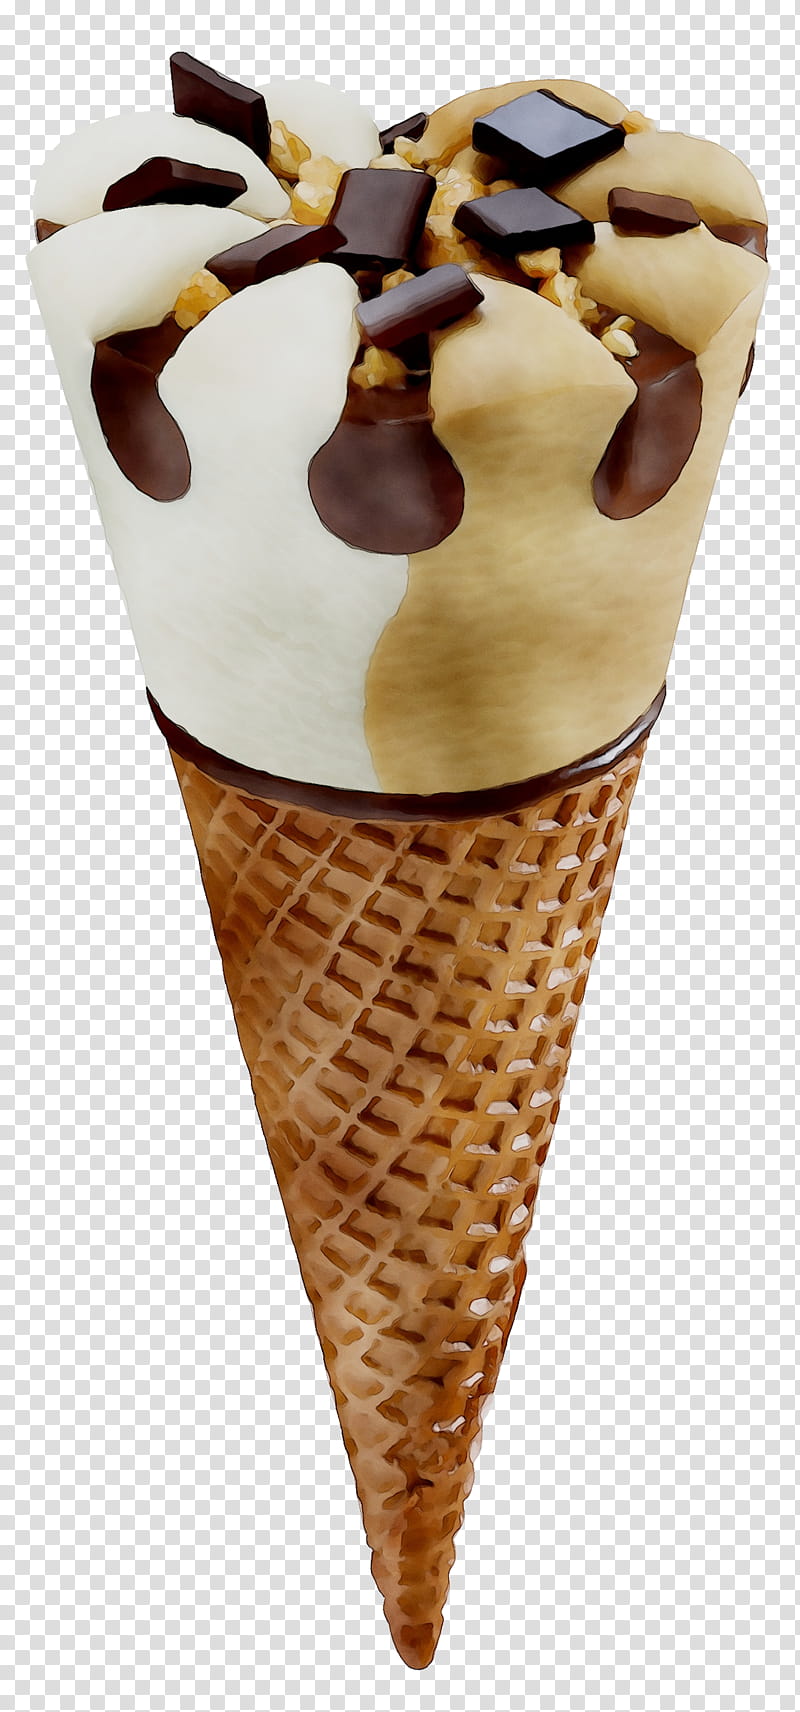 Ice Cream Cone, Ice Cream Cones, Butterscotch, Breyers, Chocolate Ice Cream, Vanilla Ice Cream, Food, Strawberry Ice Cream transparent background PNG clipart